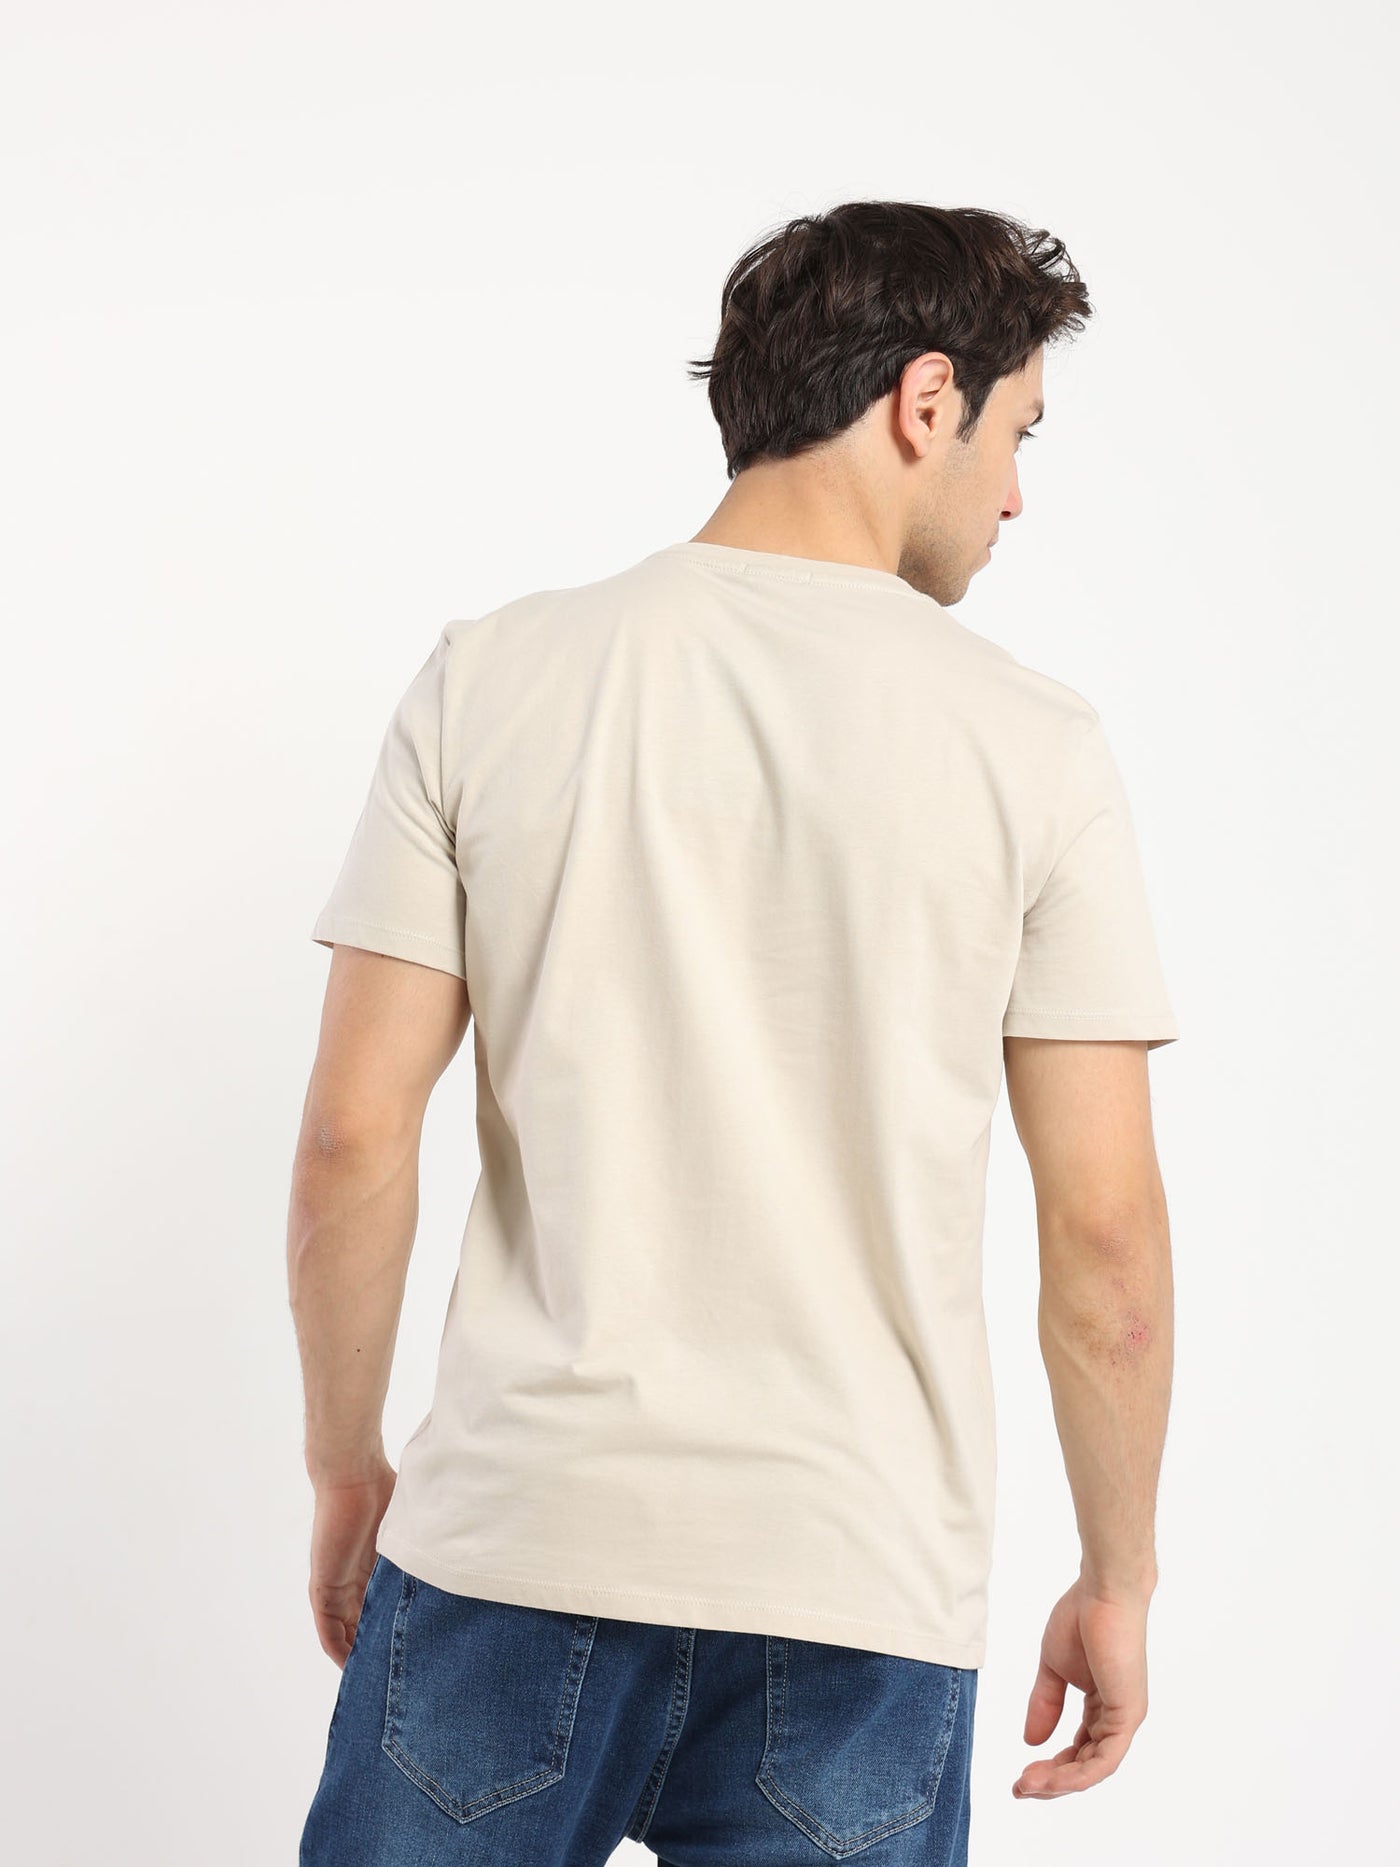 T-Shirt - "Locked" Print - Short Sleeves